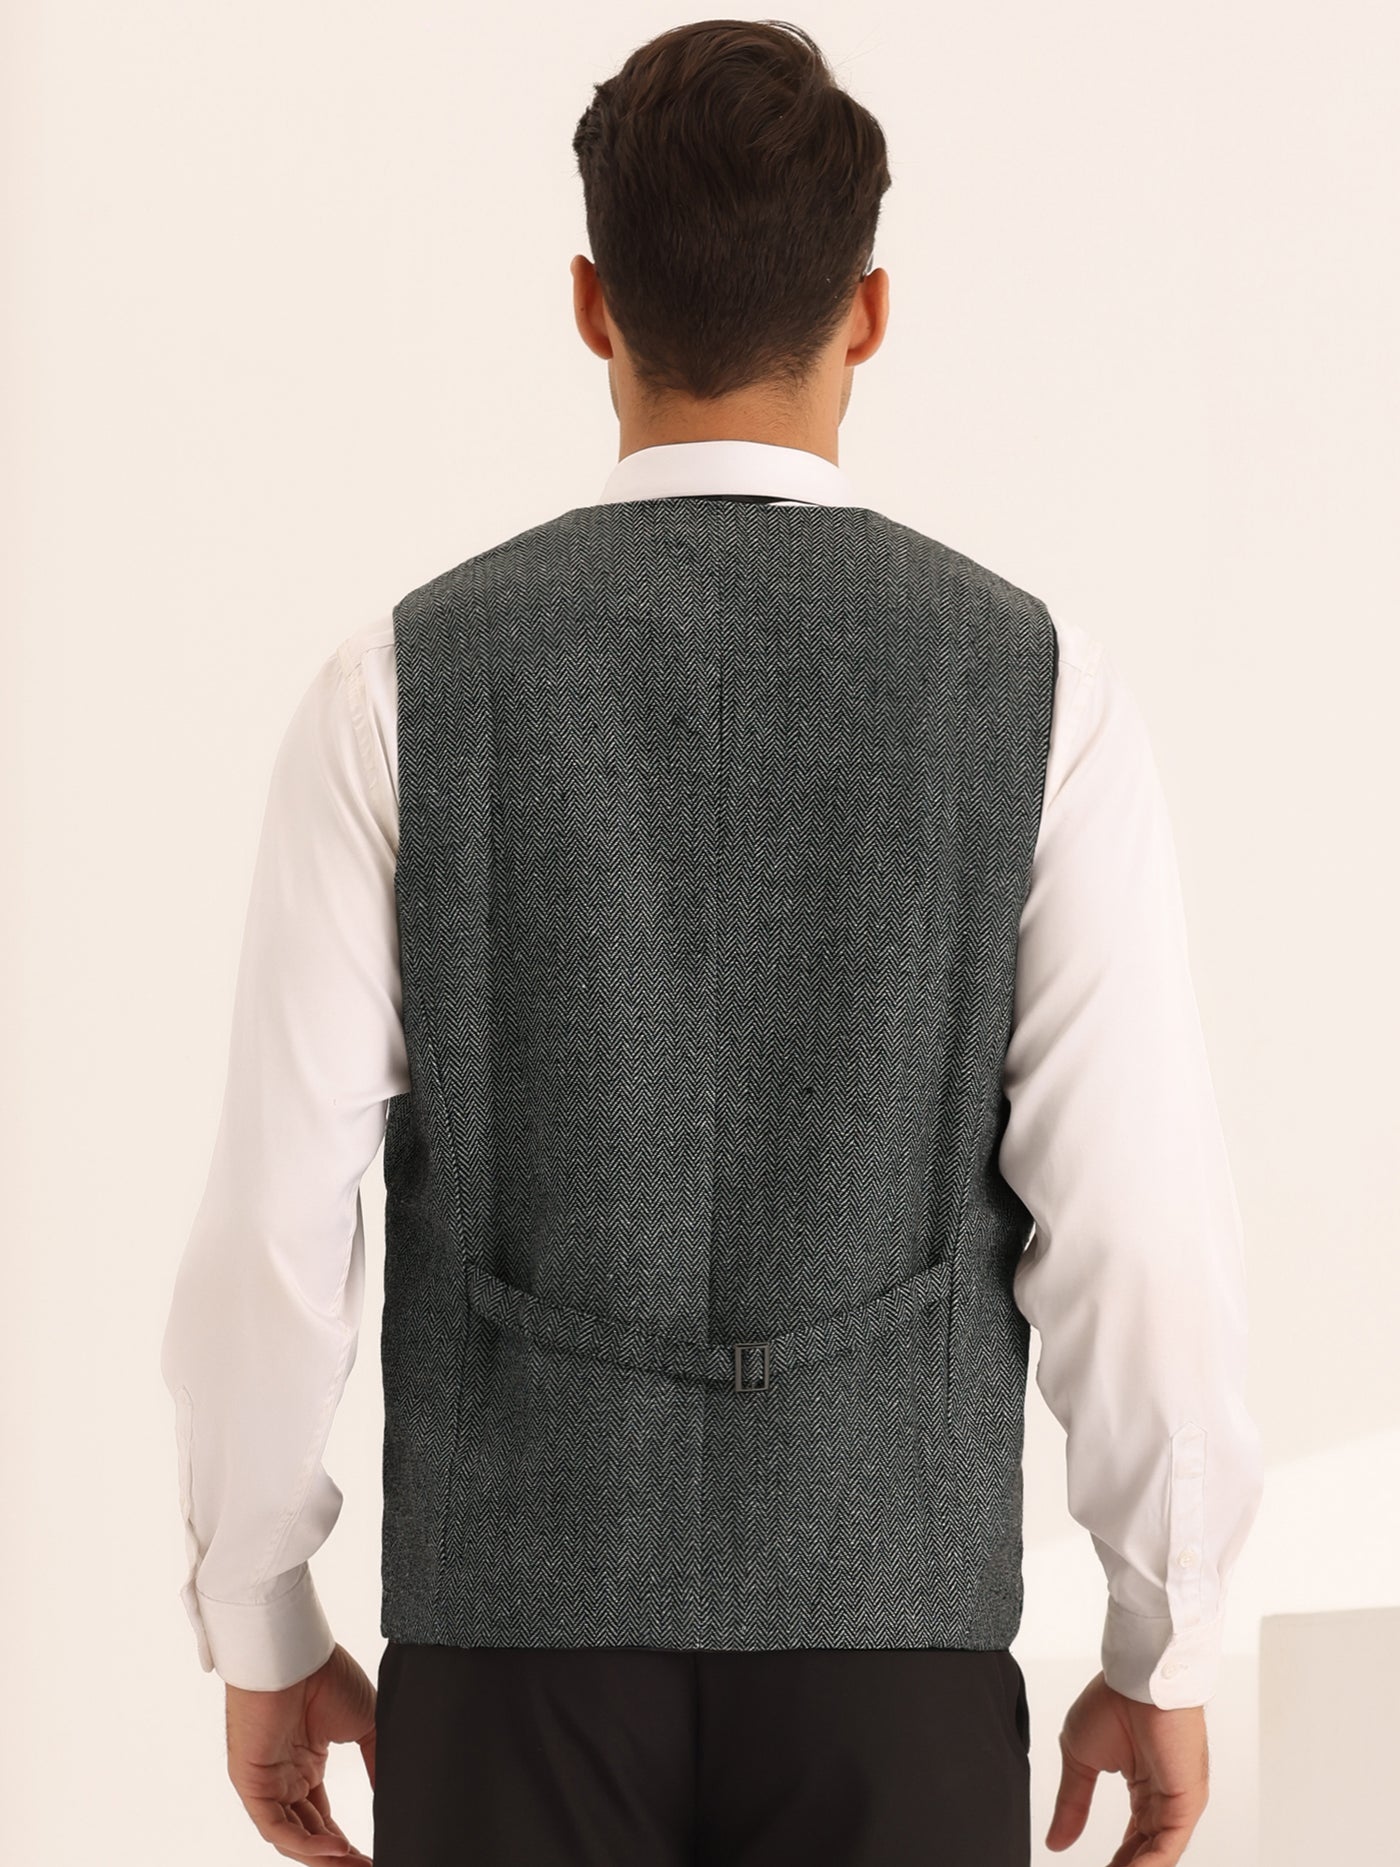 Bublédon Herringbone Waistcoat for Men's Slim Fit Single Breasted Business Dress Vest